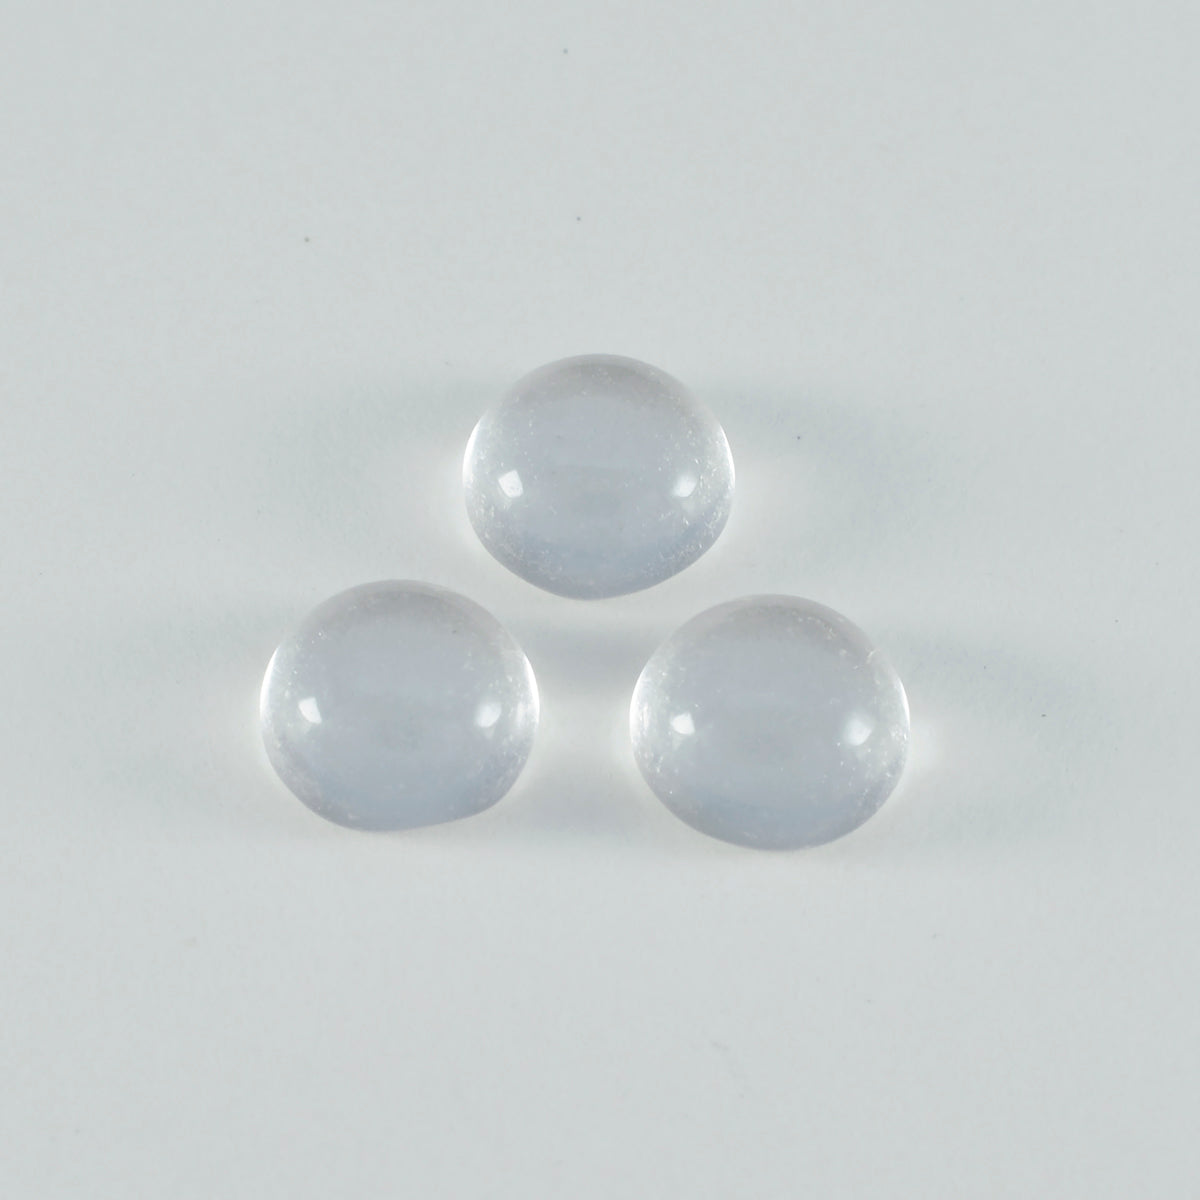 riyogems 1шт кабошон из белого кристалла кварца 7x7 мм круглой формы + 1 драгоценный камень качества